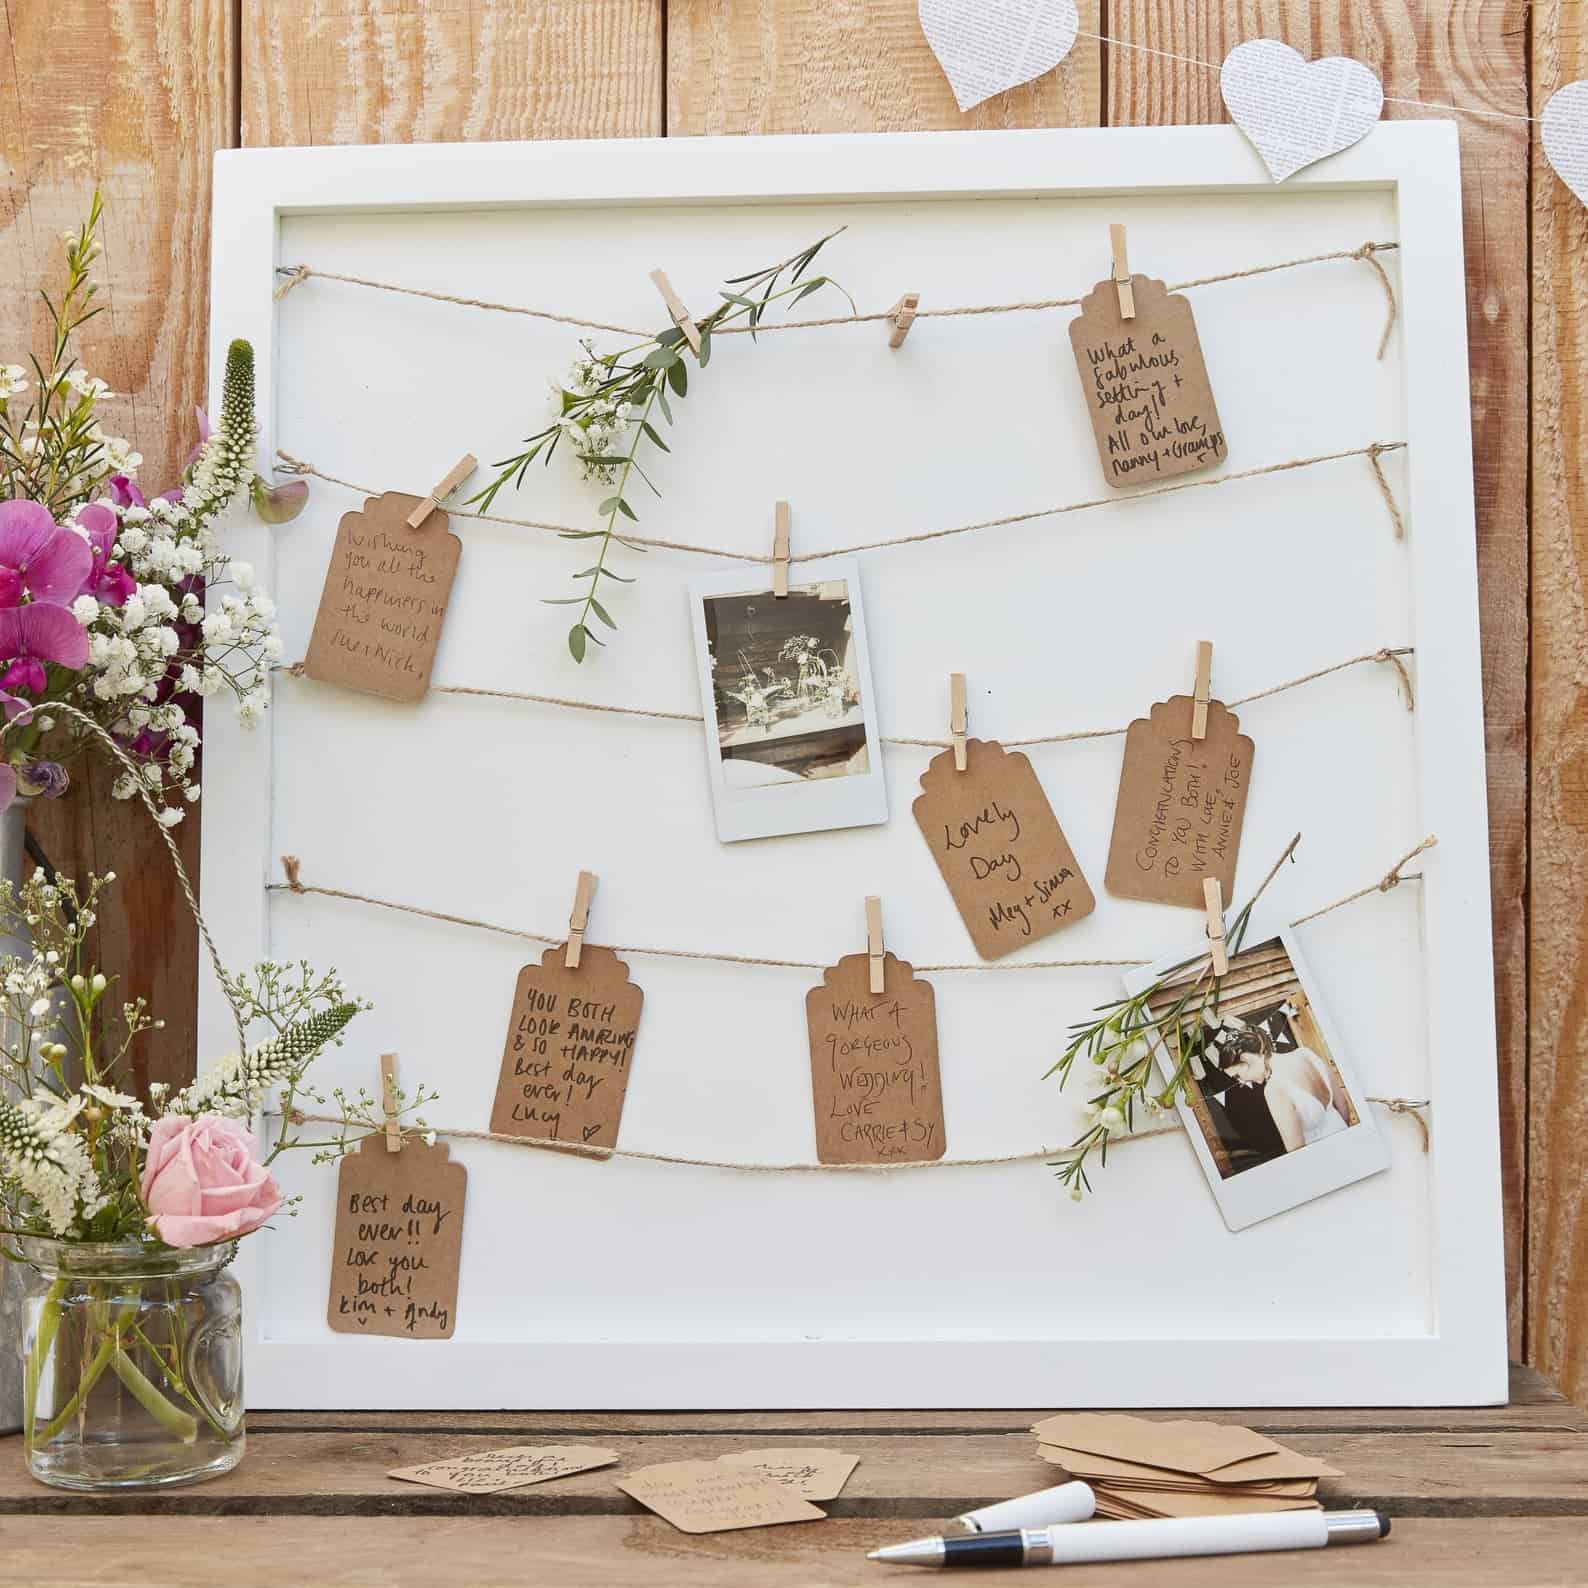 30 Creative Polaroid Wedding Ideas You'll Love  Polaroid wedding, Polaroid  guest book wedding, Wedding guest activities